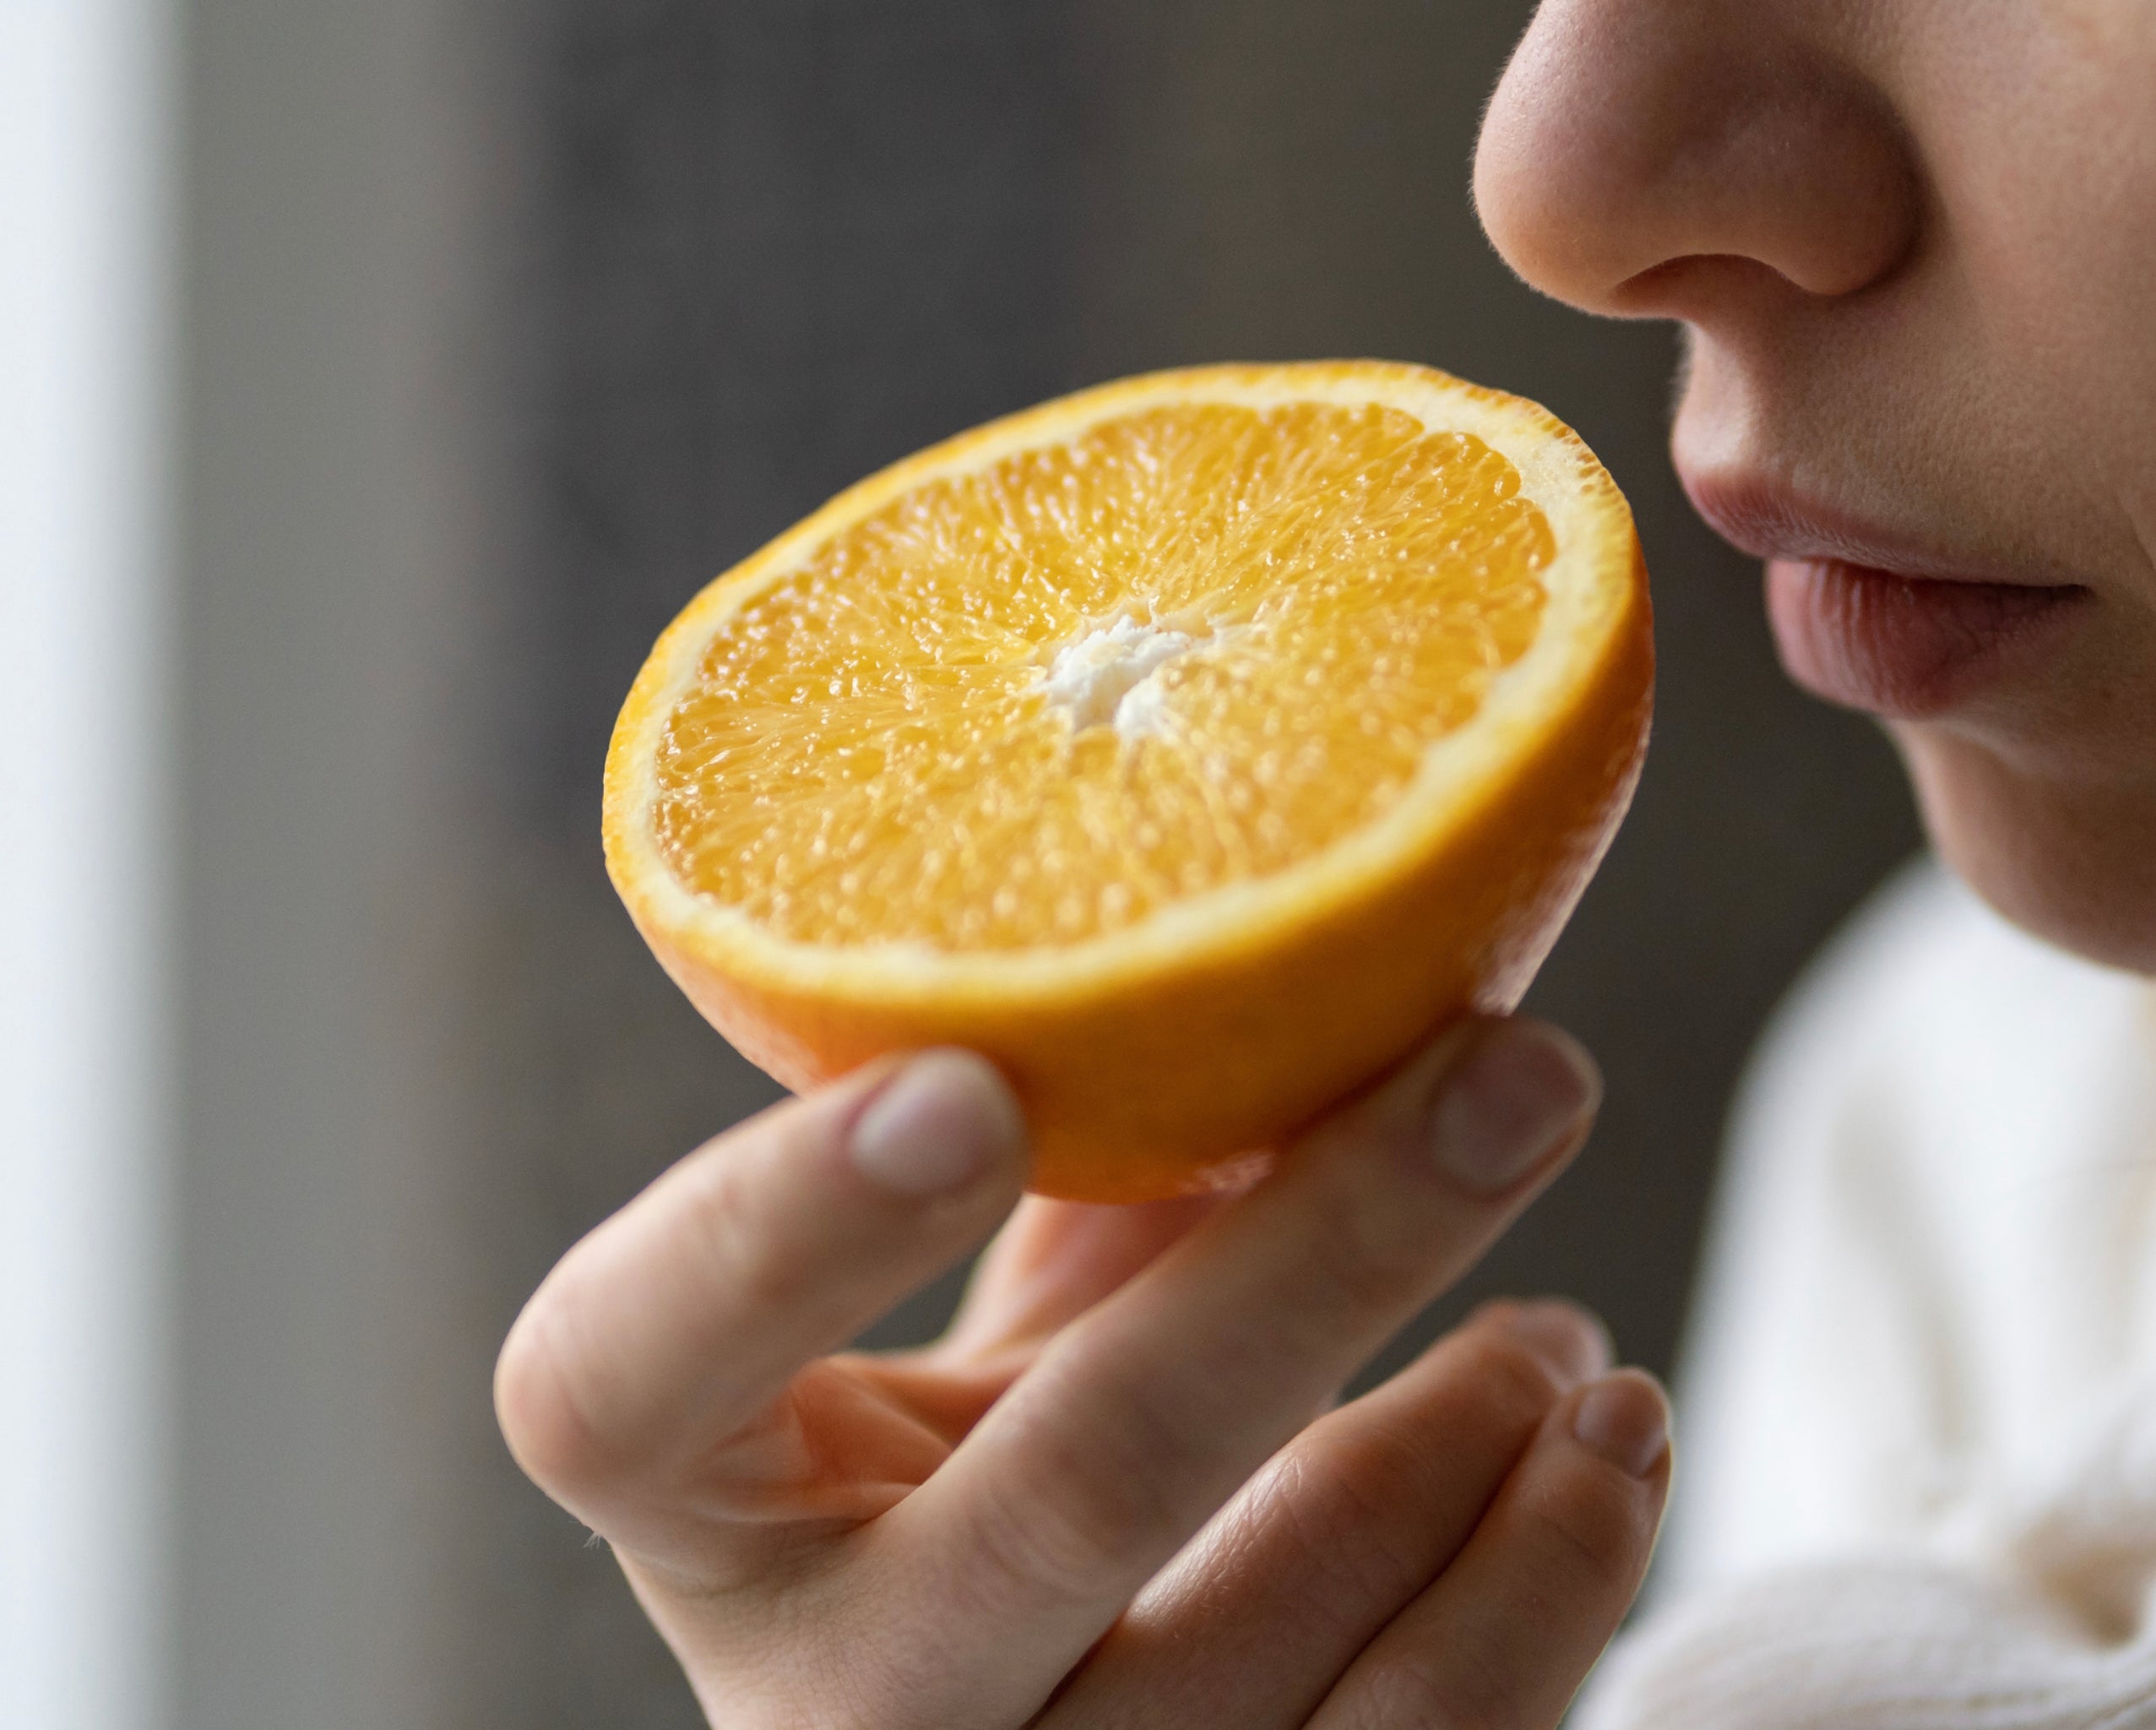 Organic Sweet Orange Essential Oil, Health Benefits and Usage